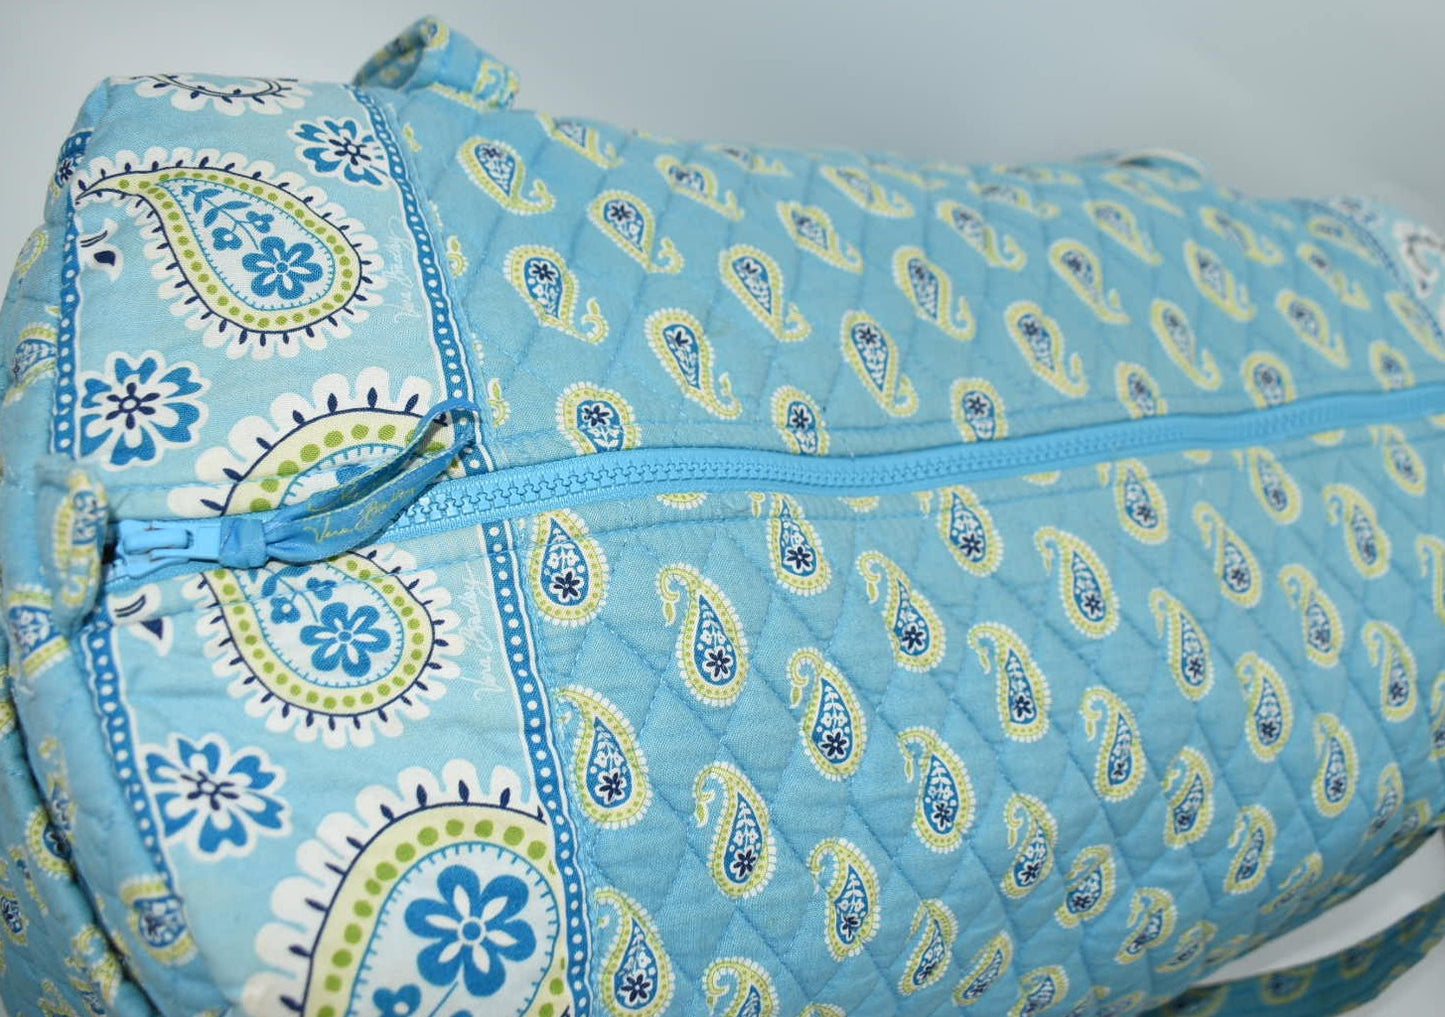 Vera Bradley Large Duffel Bag in "Bermuda Blue" Pattern